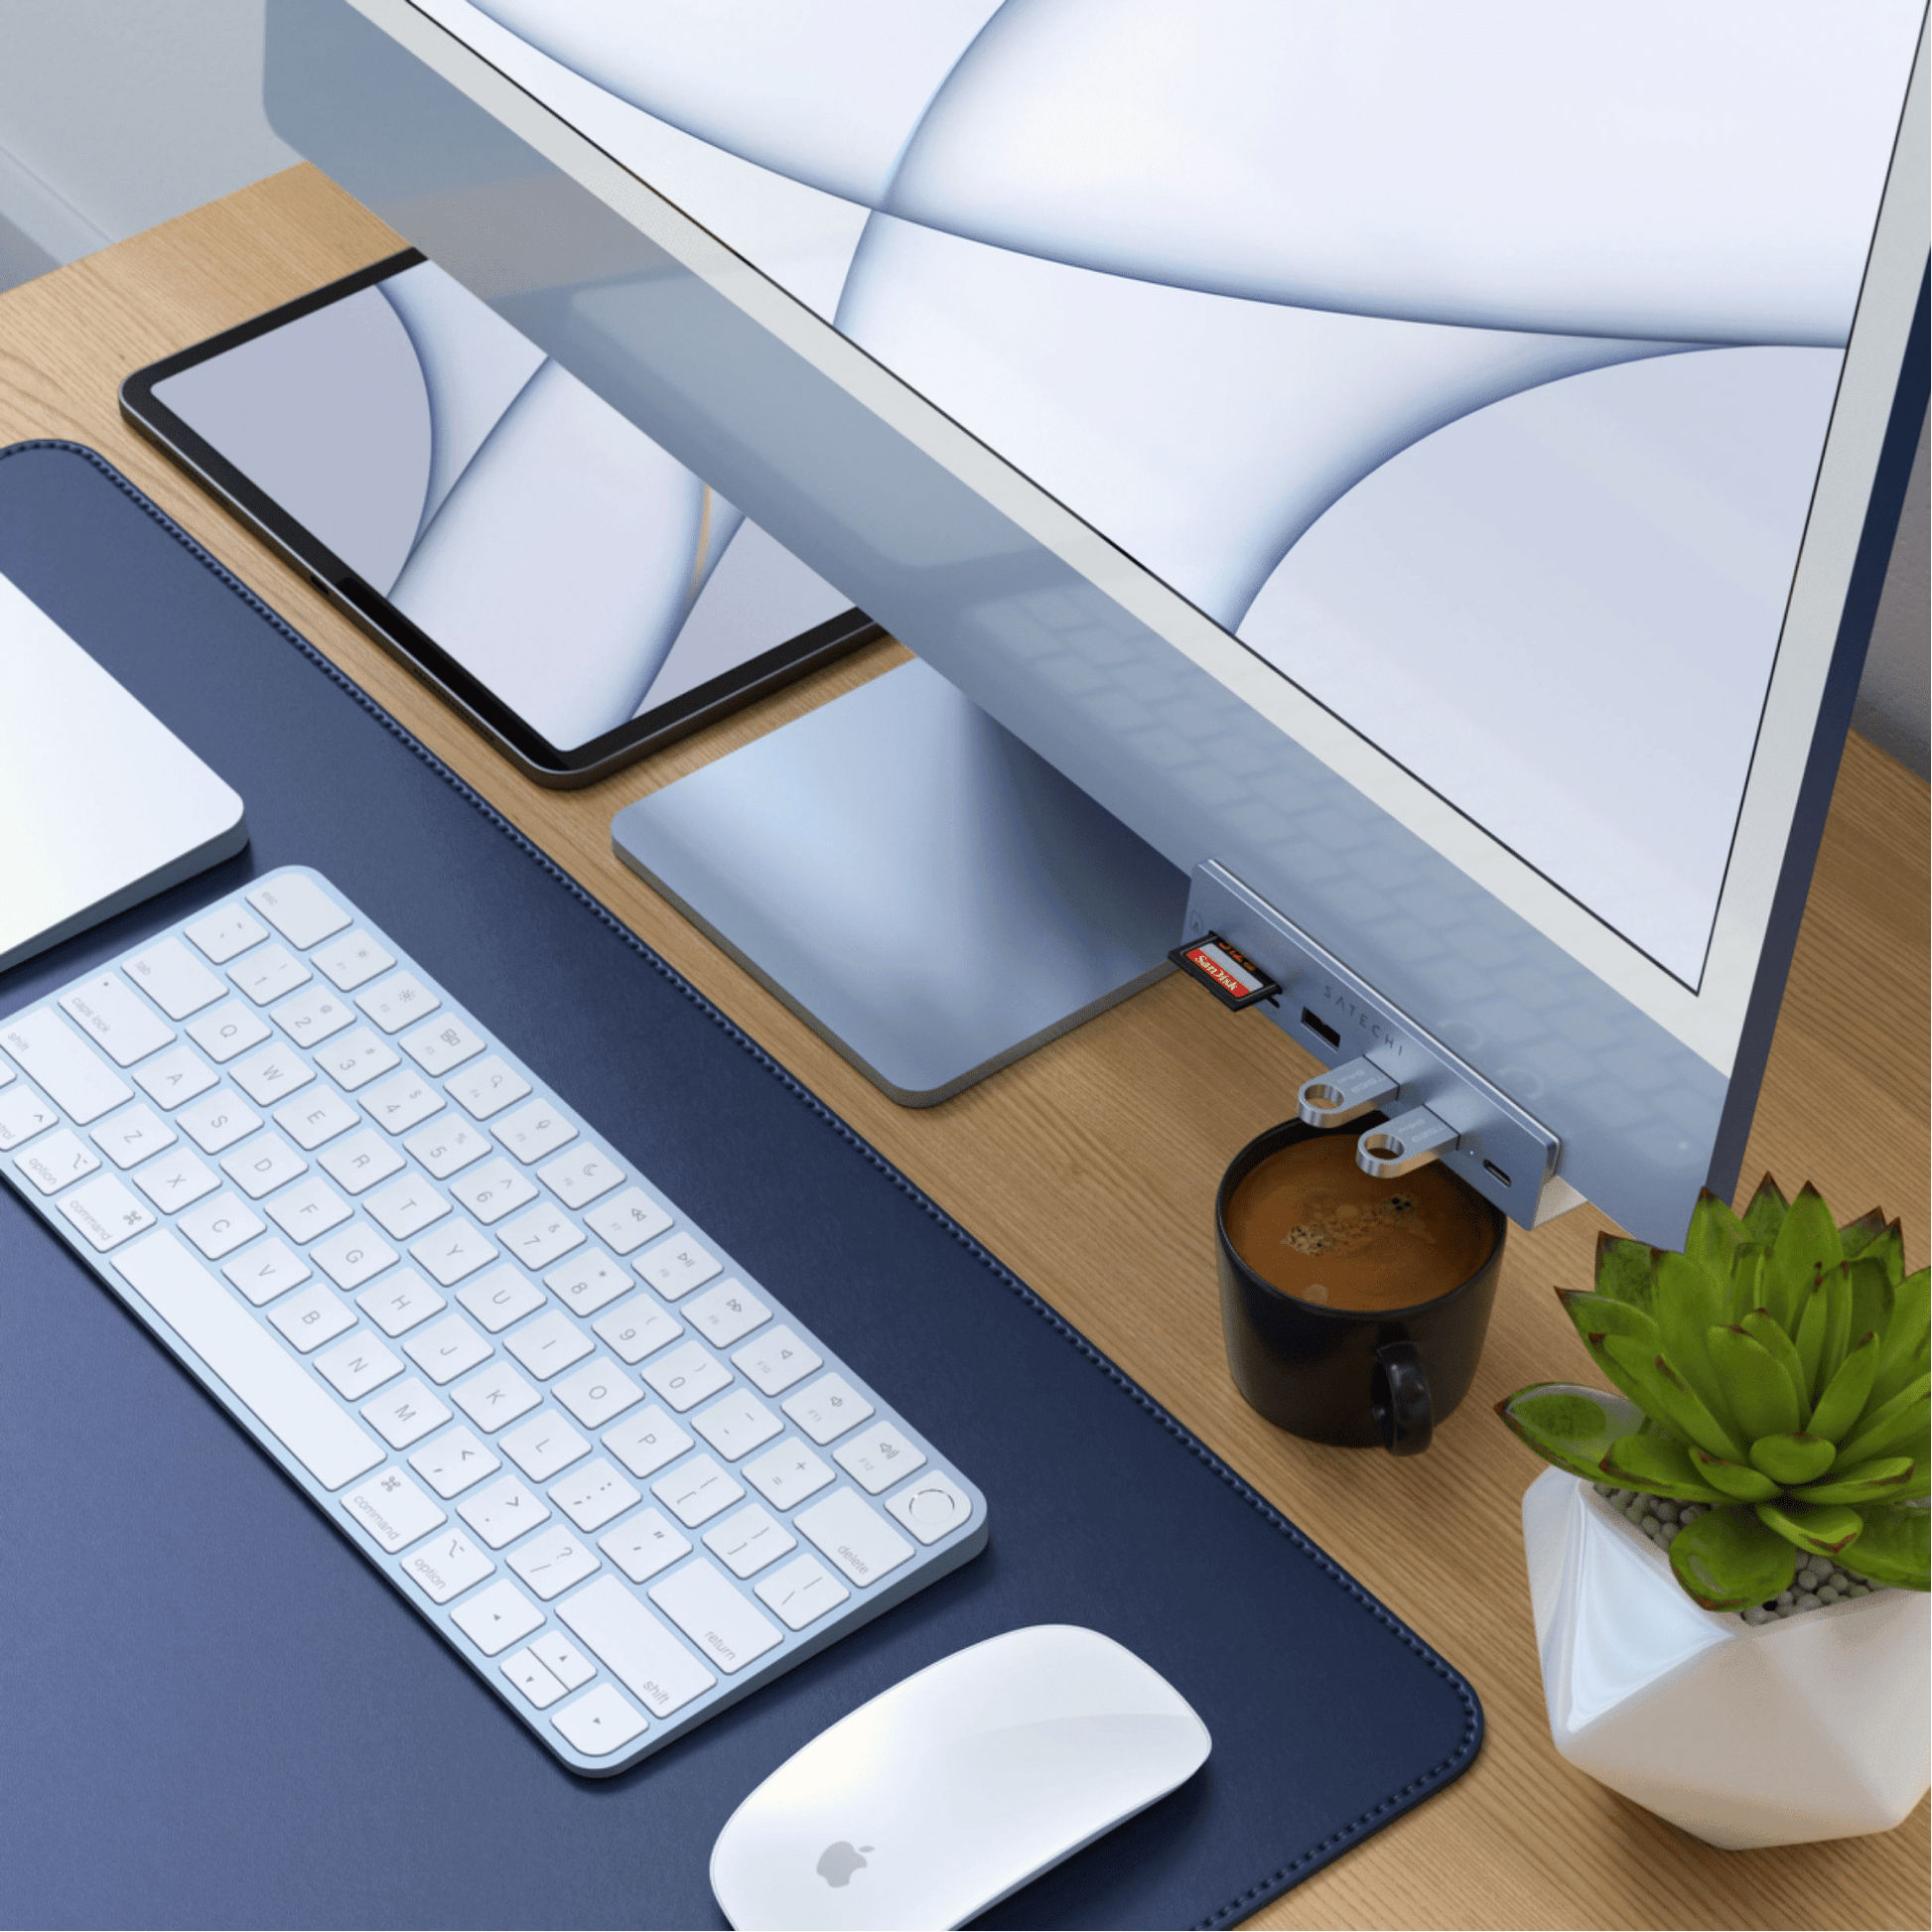 Satechi - USB-C Clamp Hub für iMac 24" - Hellblau